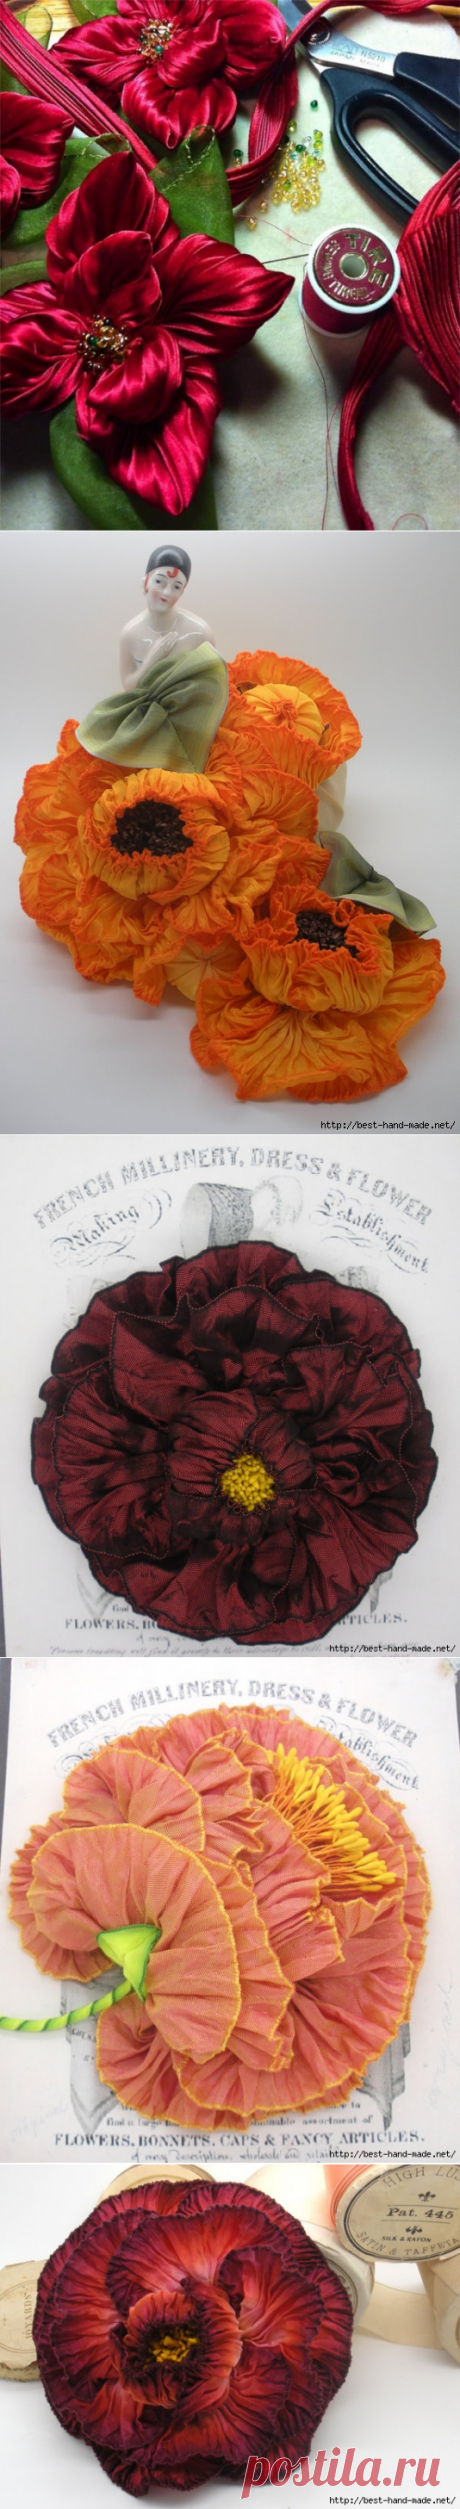 Цветы и броши в технике шибори — Рукоделие